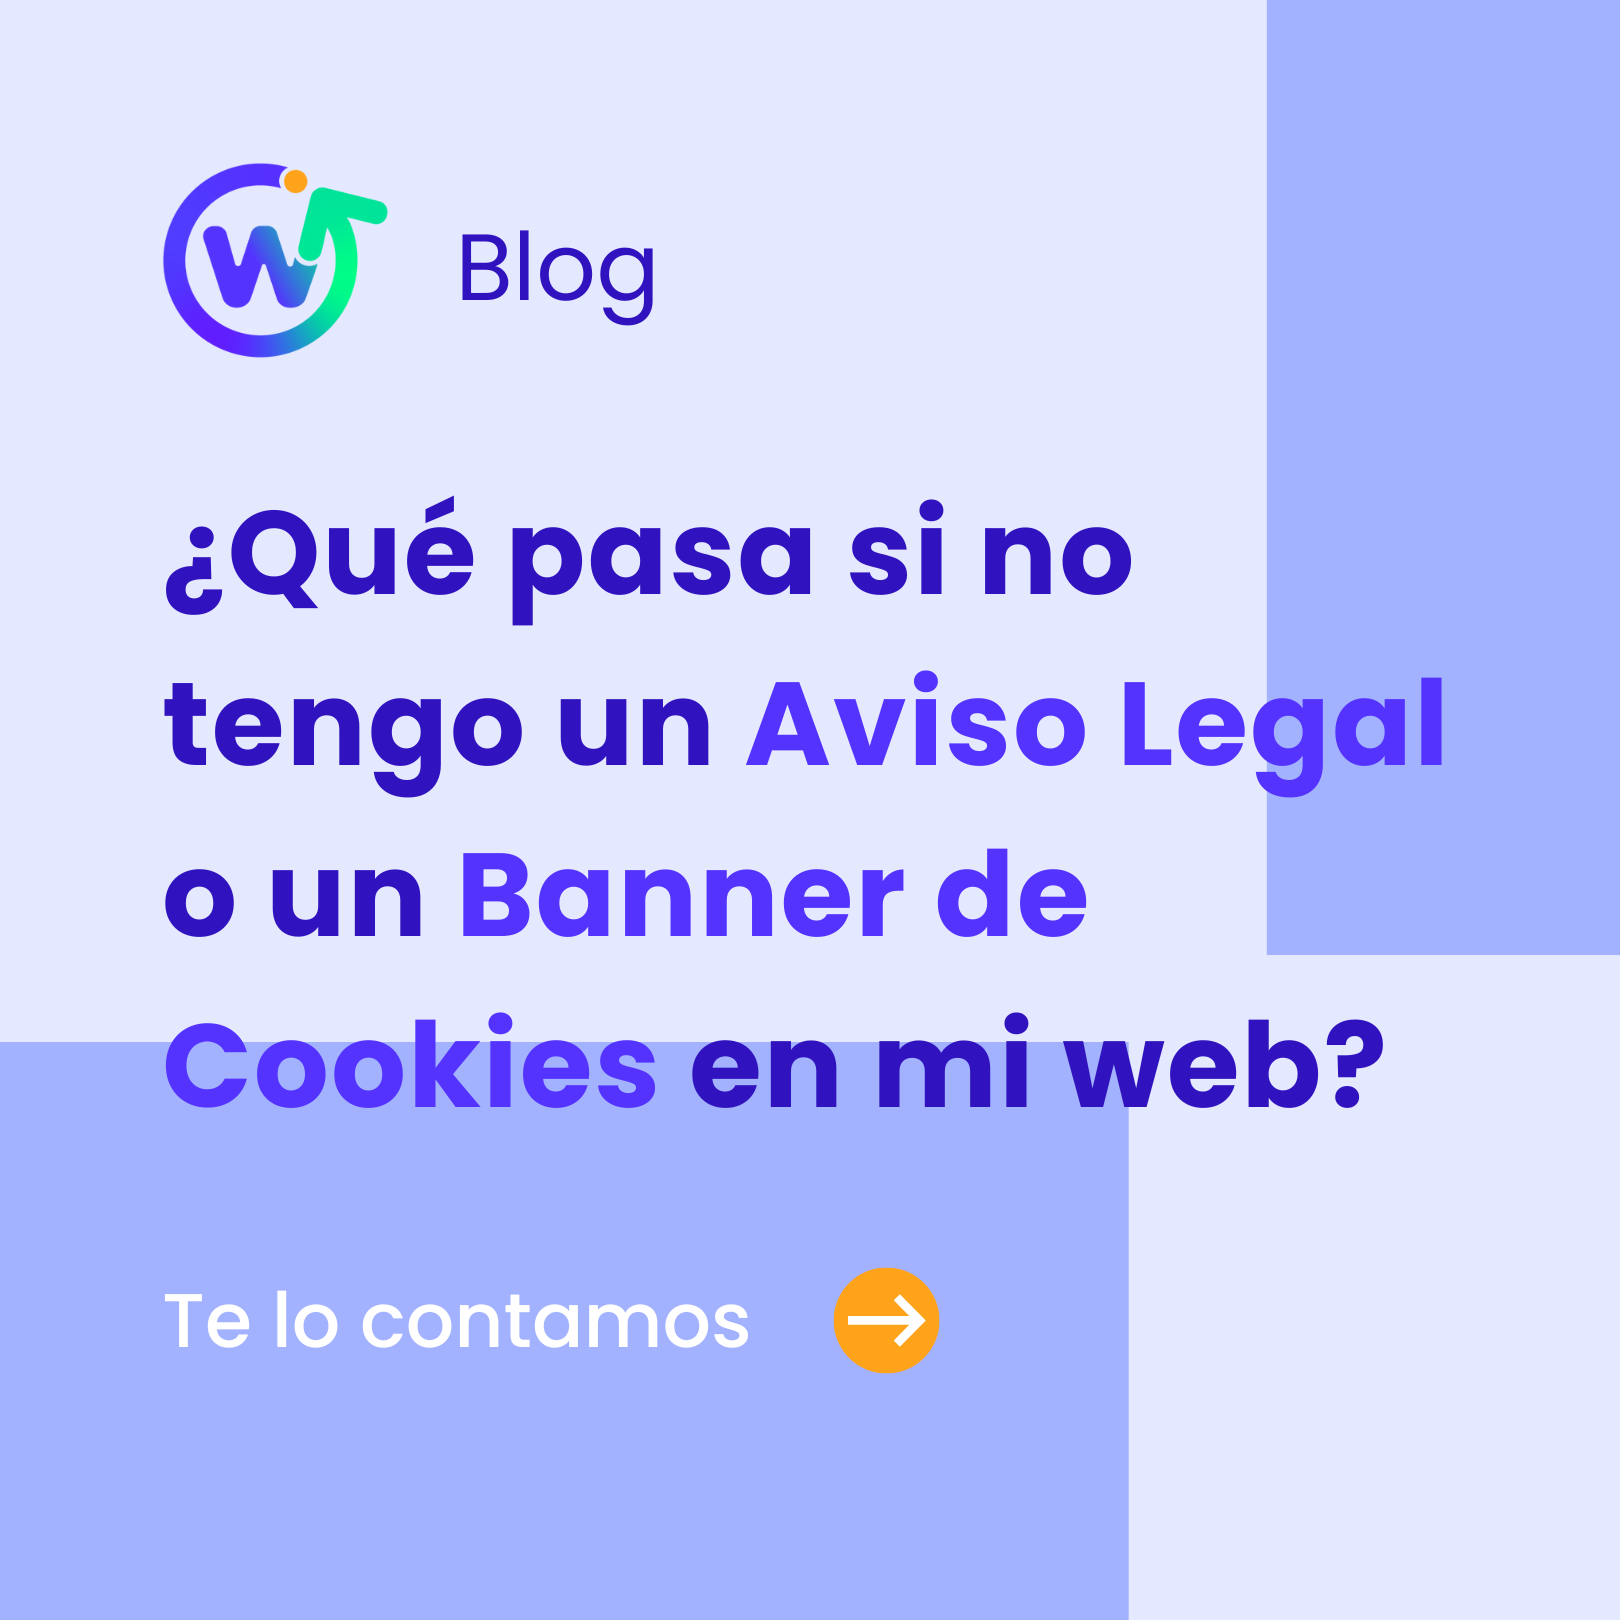 ¿Qué pasa si no tengo un Aviso Legal o un banner de Cookies en mi web?